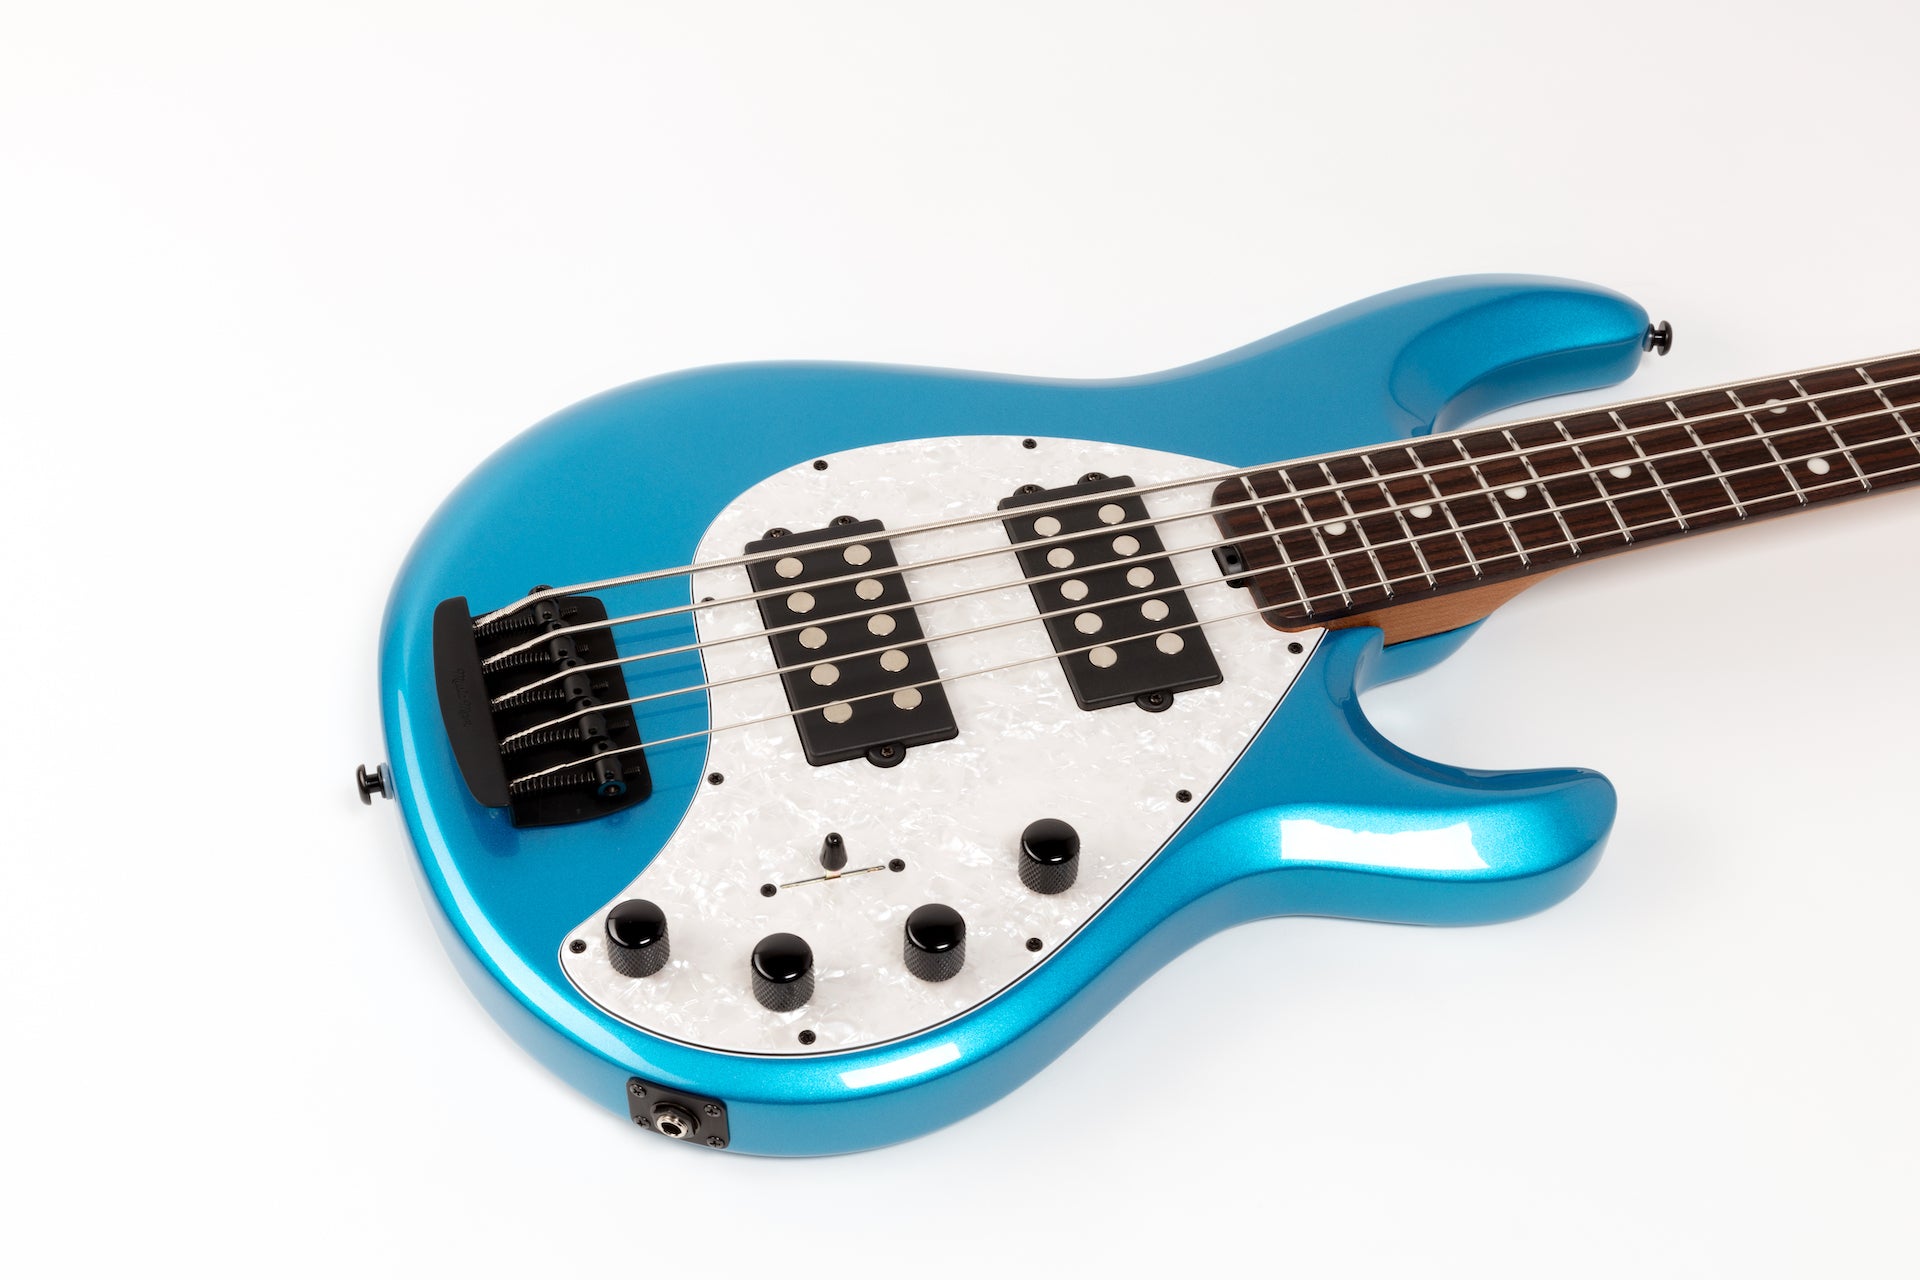 Ernie Ball Music Man StingRay Special 5 HH Bass Guitar - Speed Blue with Rosewood F96539Fingerboard - HIENDGUITAR   Musicman bass